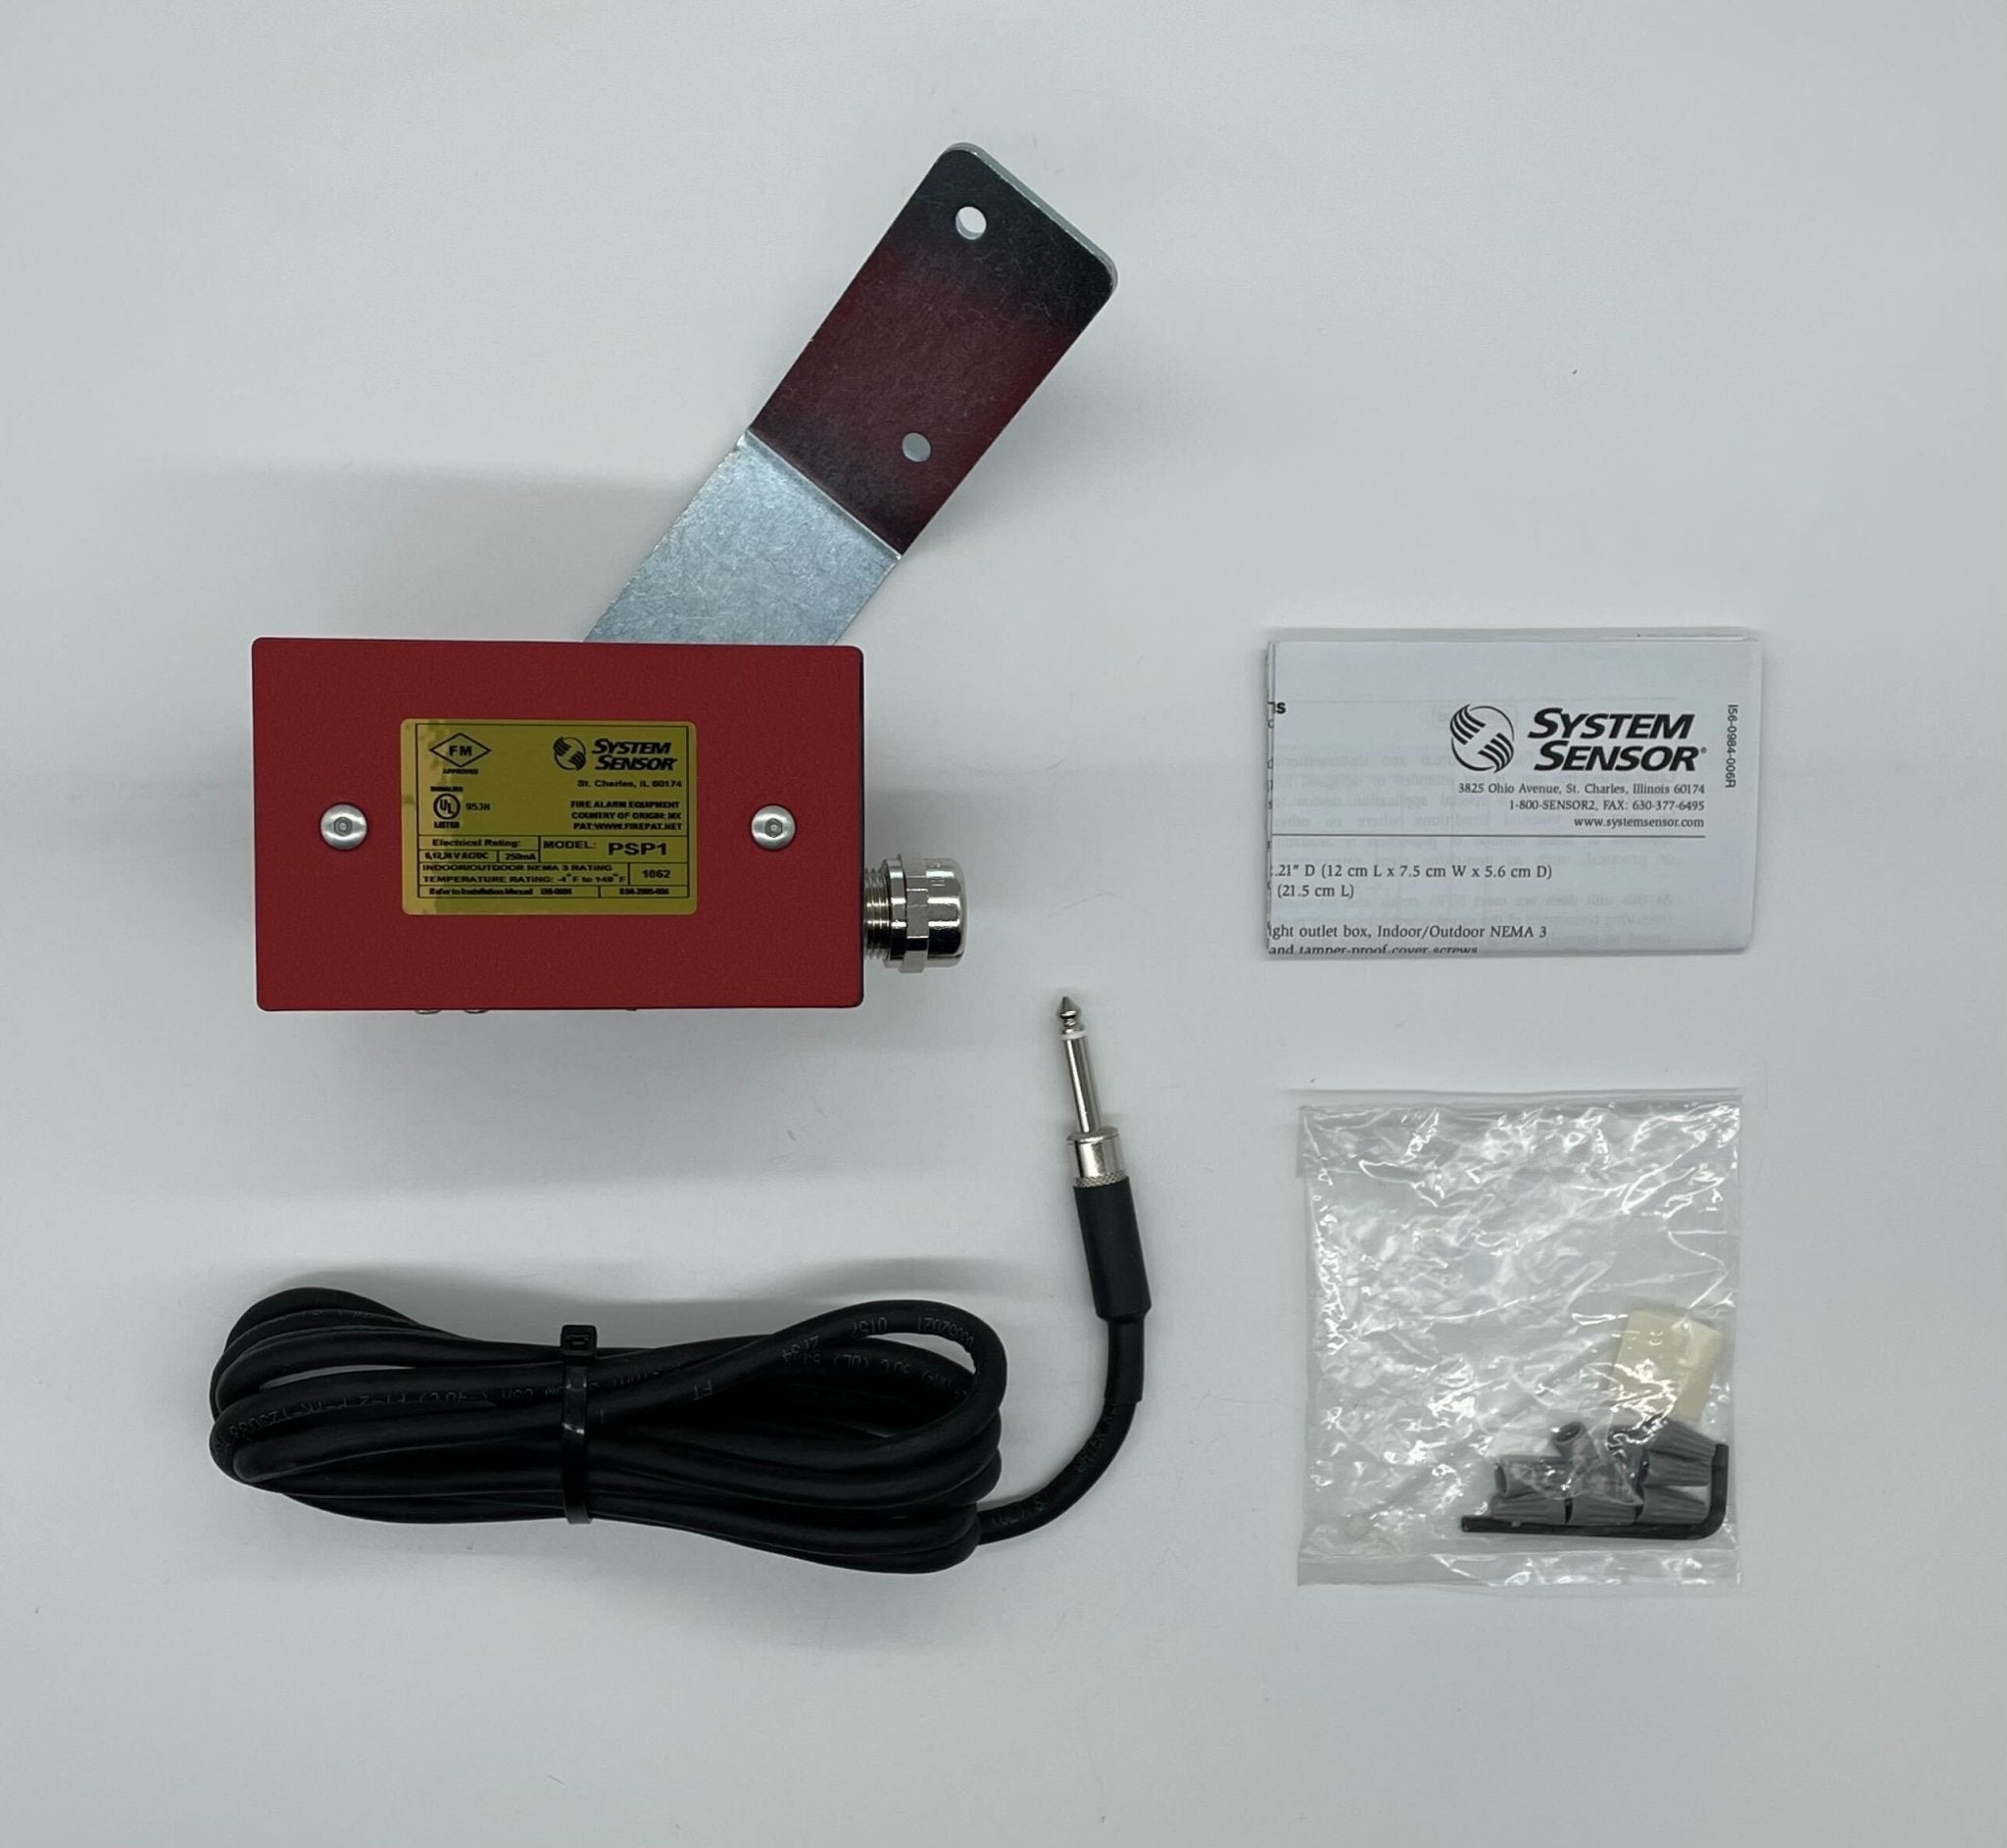 System Sensor PSP1 Supervisory Switch - The Fire Alarm Supplier